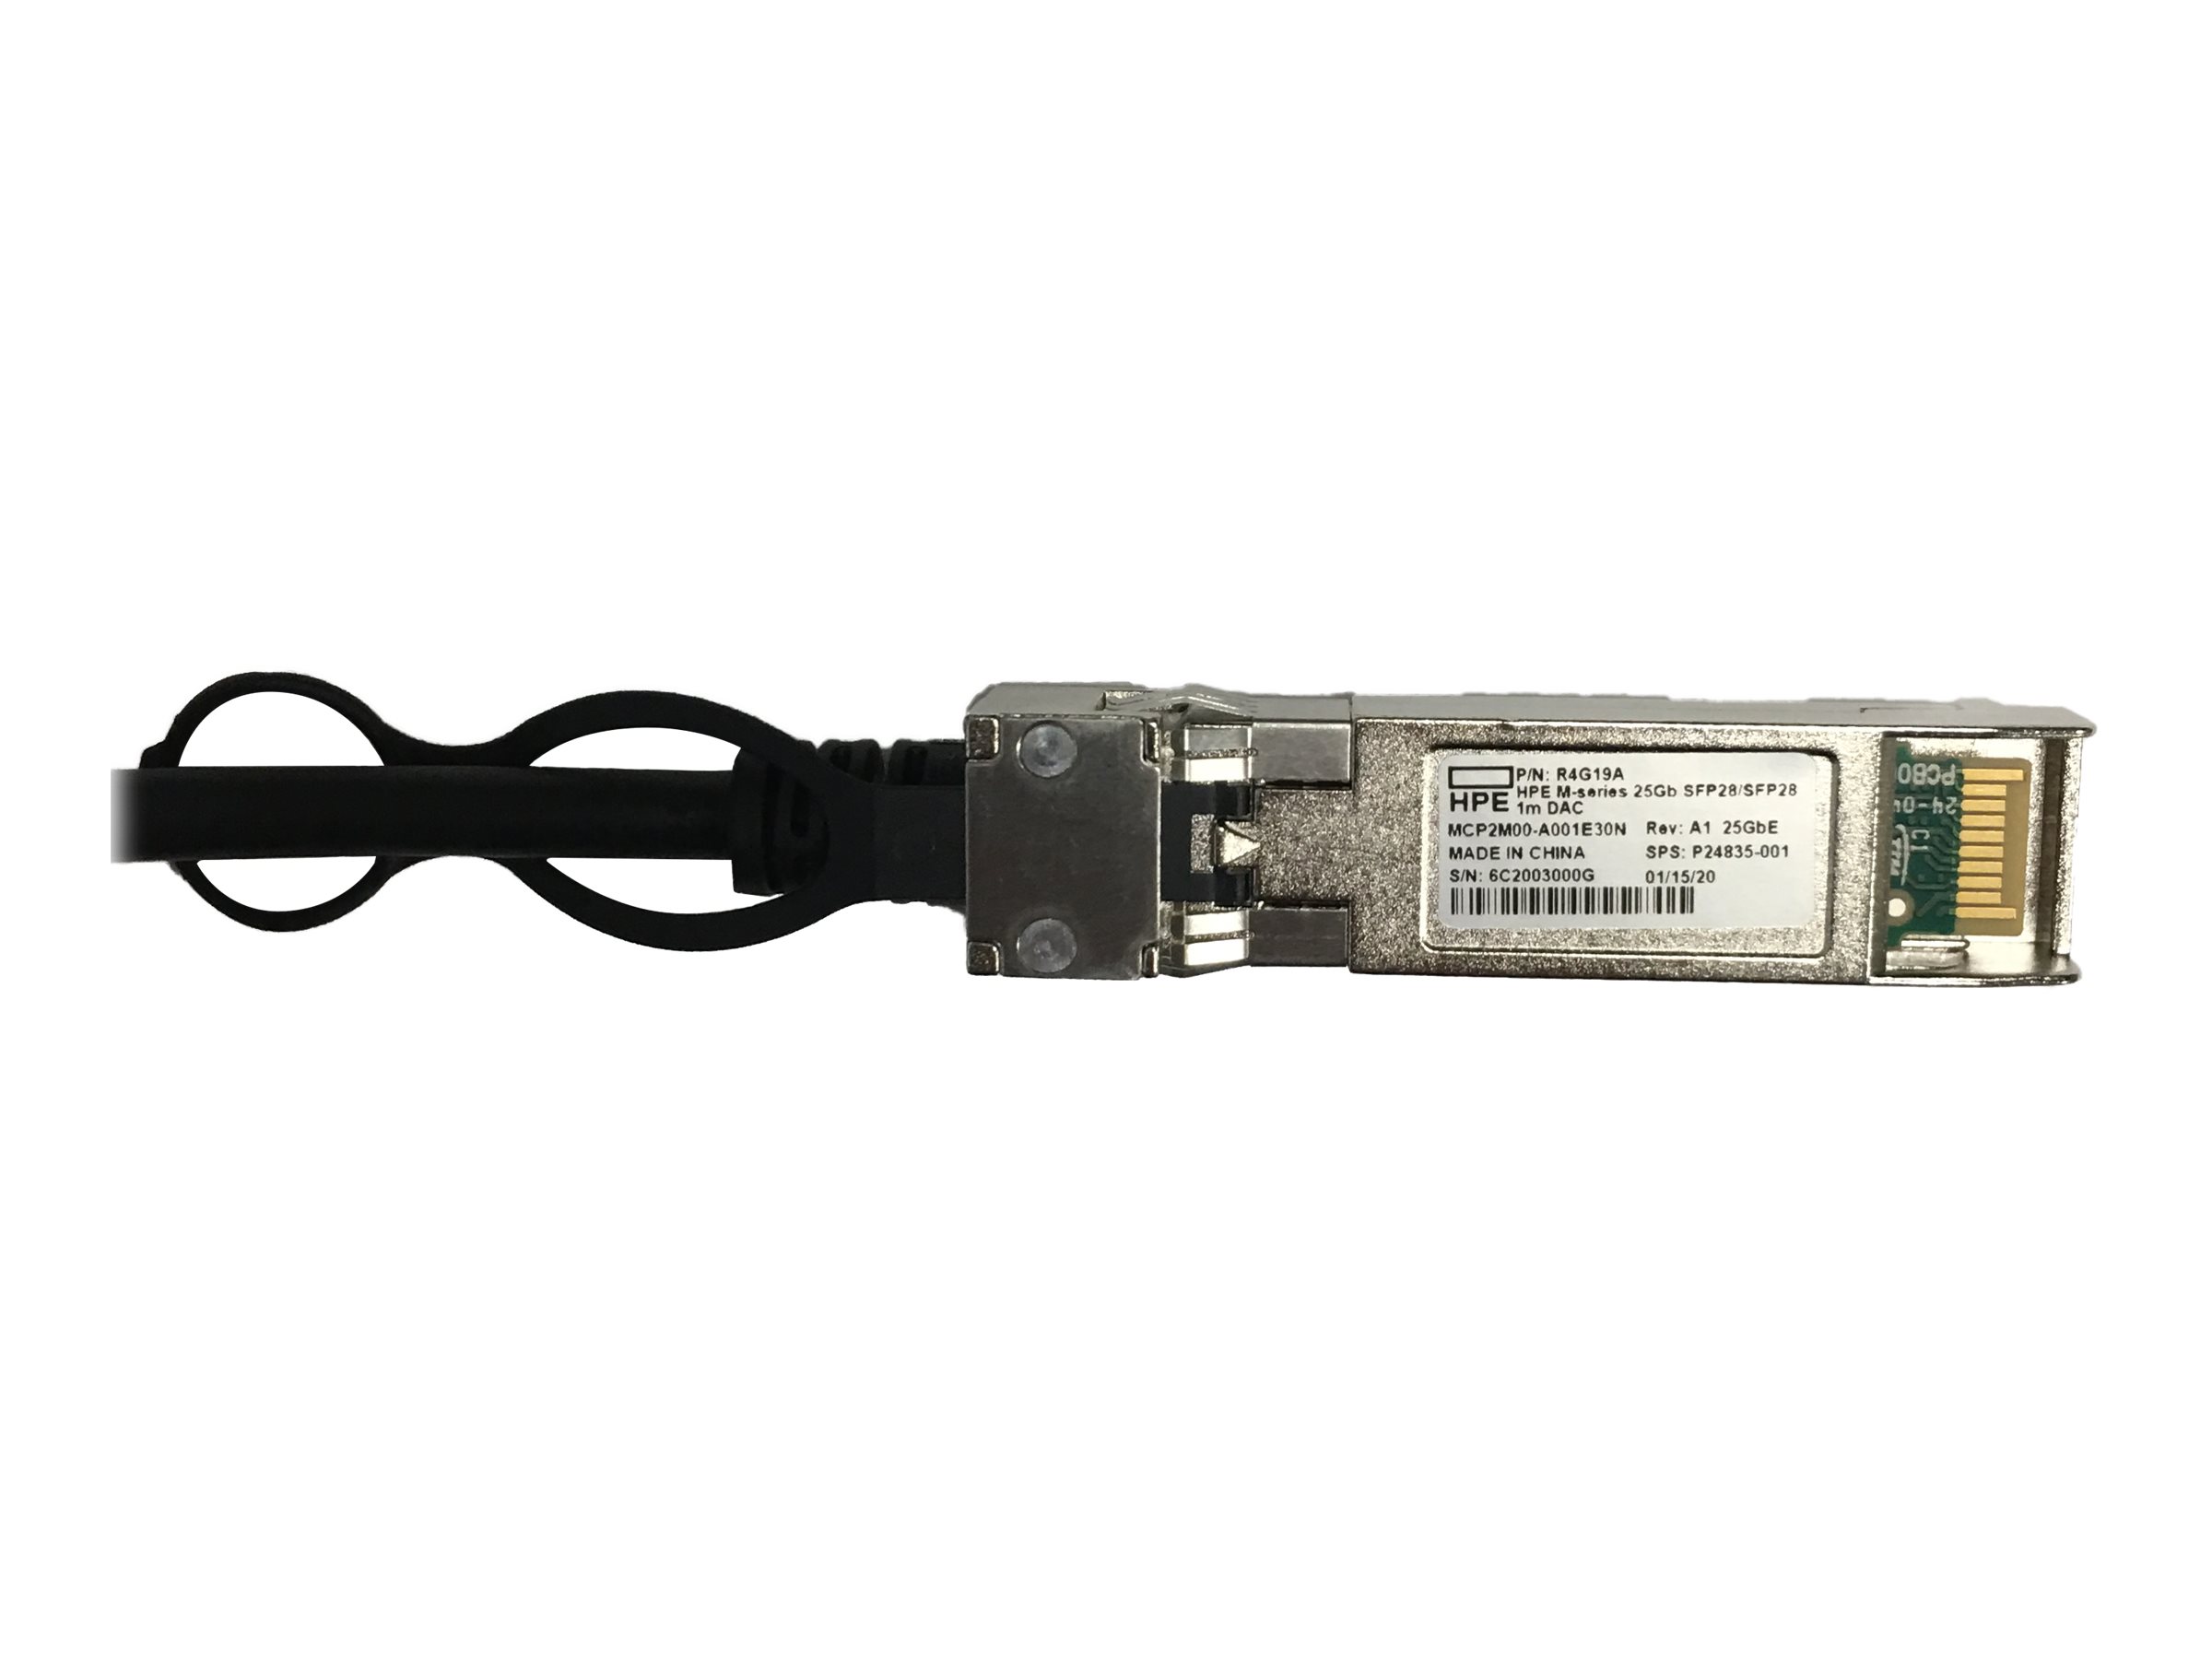 HPE M-SERIES 25GB SFP28/SFP28 STOCK (R4G19A)